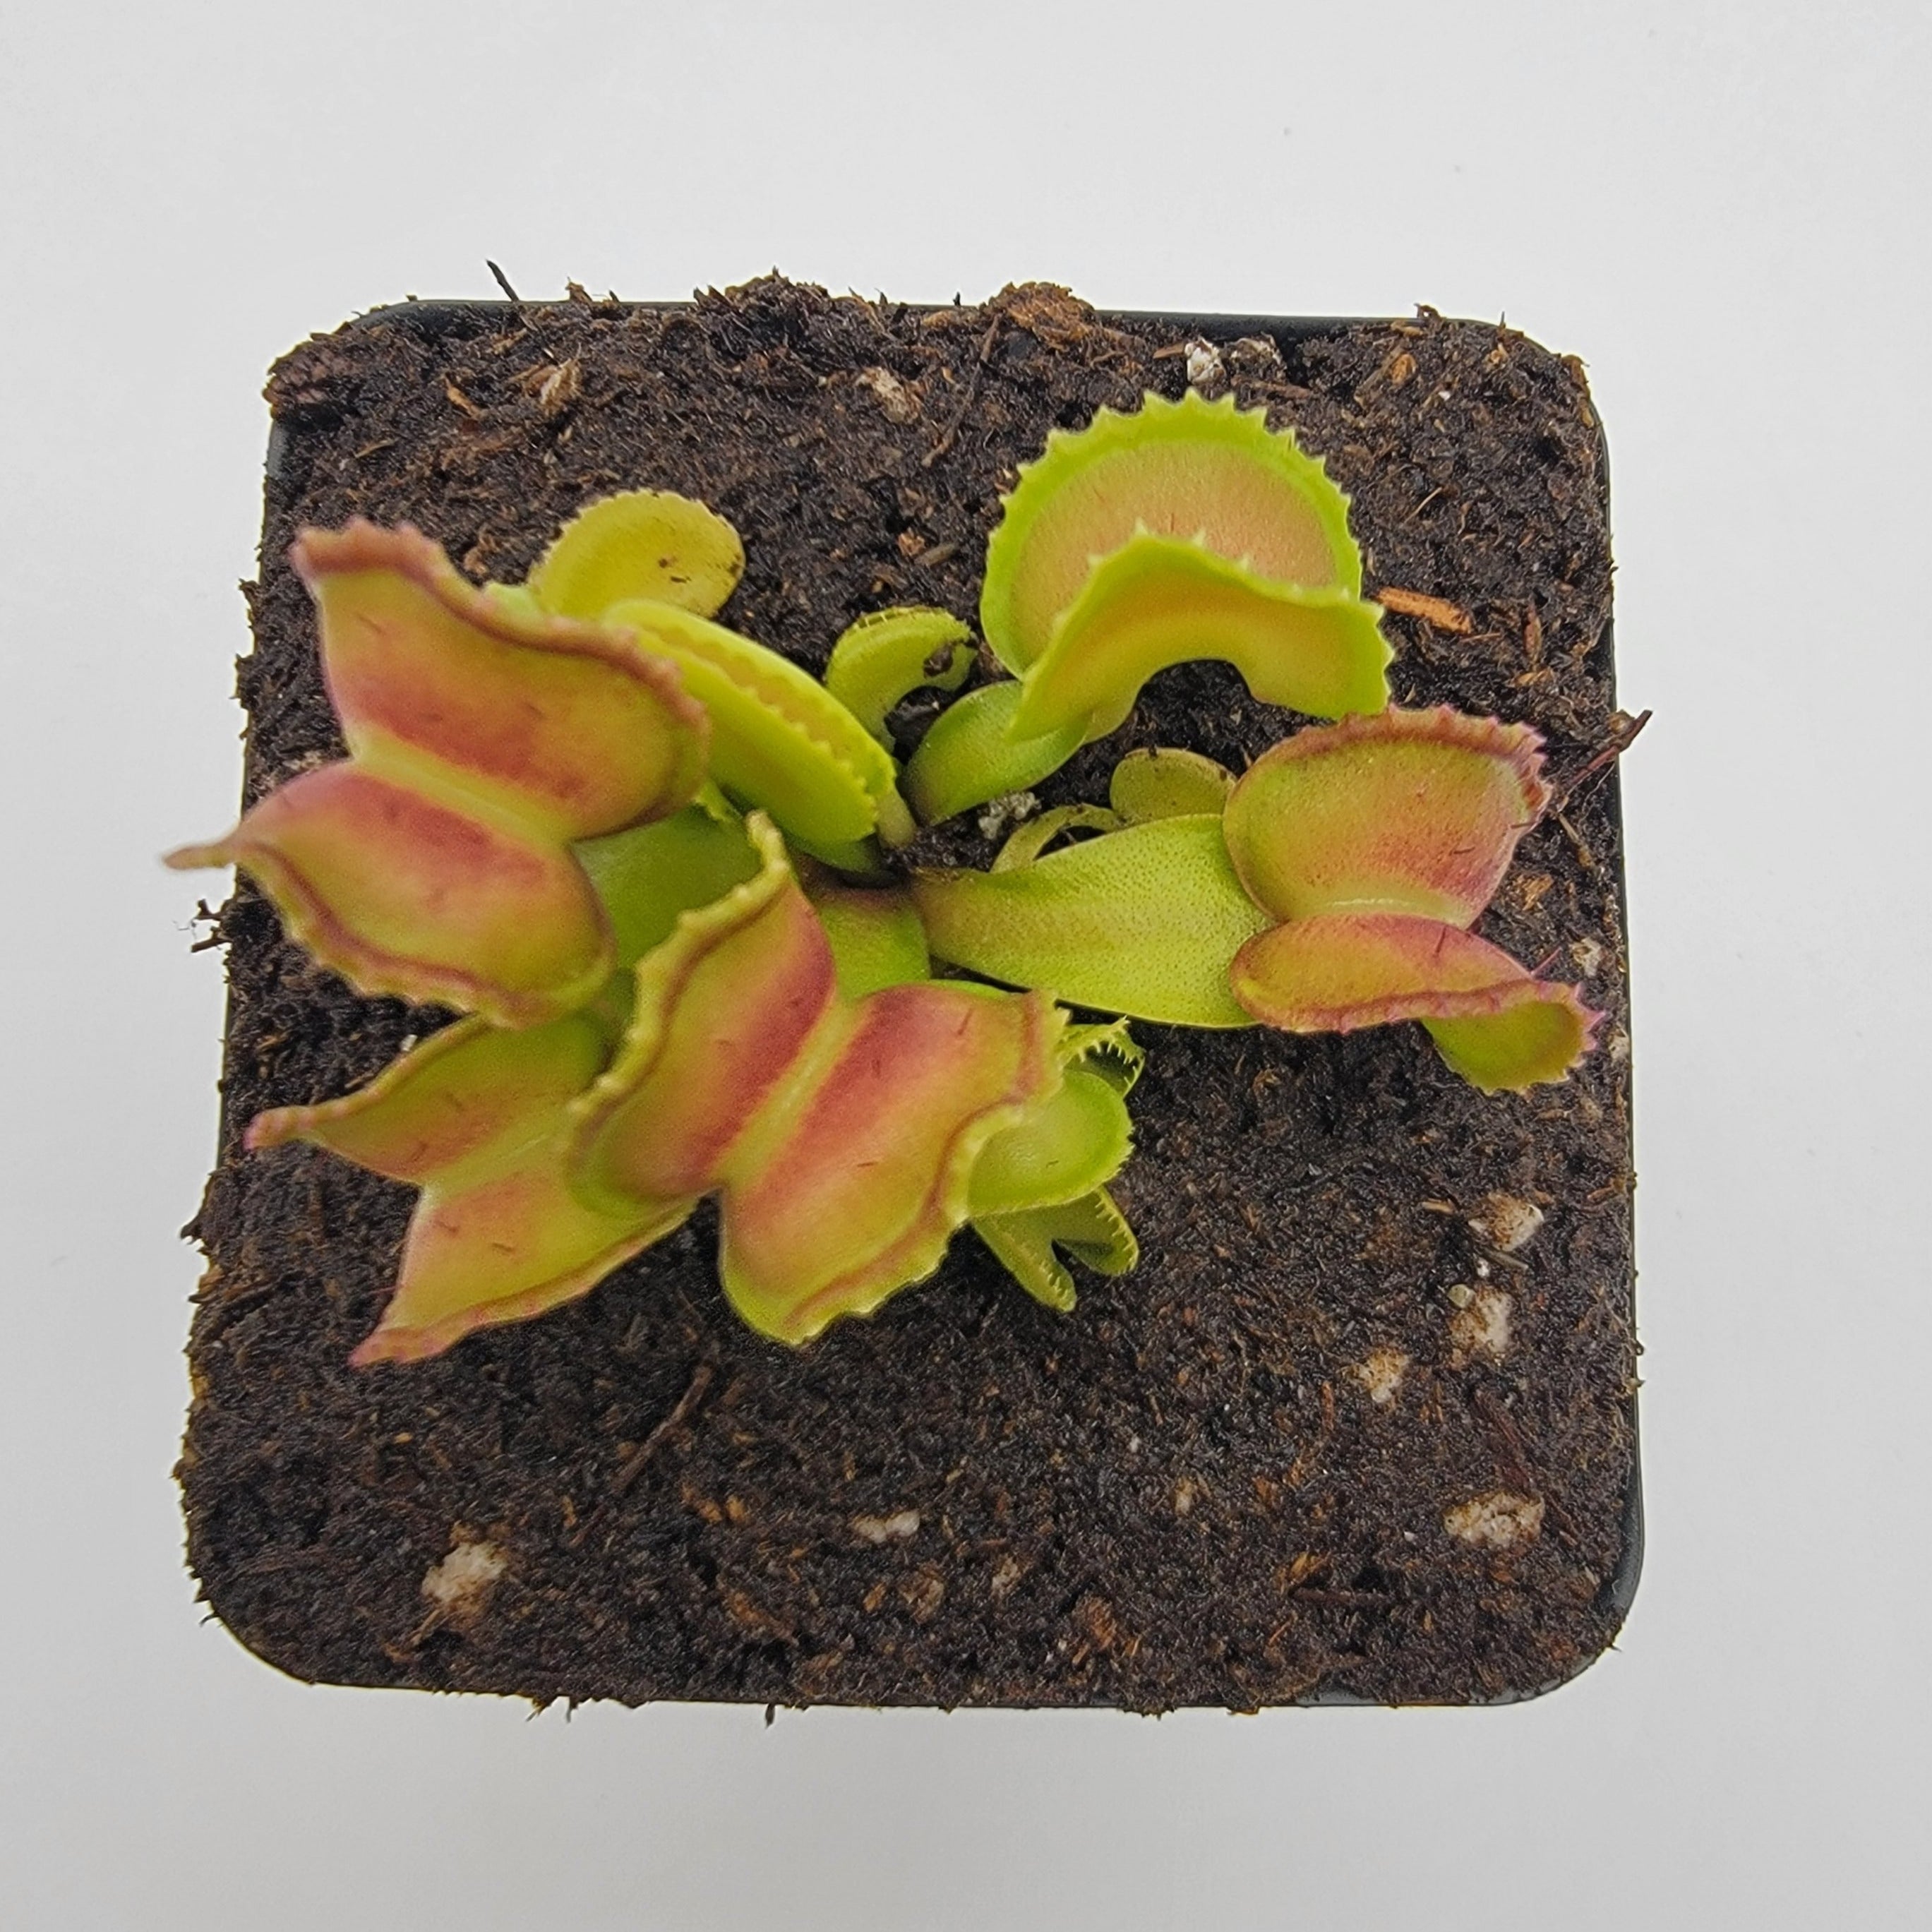 Venus flytrap (Dionaea muscipula) "GJ Giant Cudo" - Rainbow Carnivorous Plants LLC